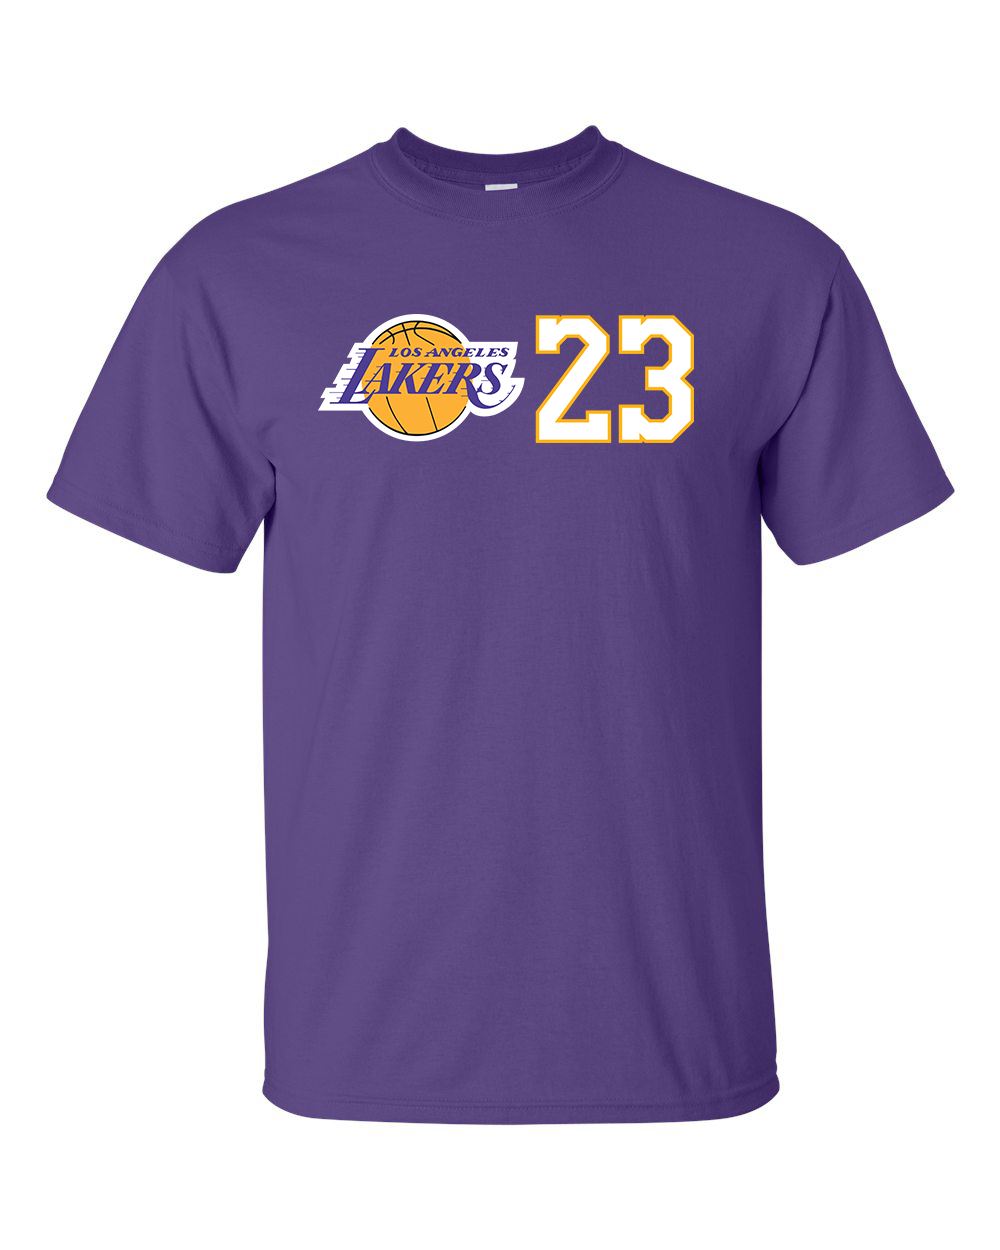 Lebron James Los Angeles Lakers - Black/Yellow/Purple #23